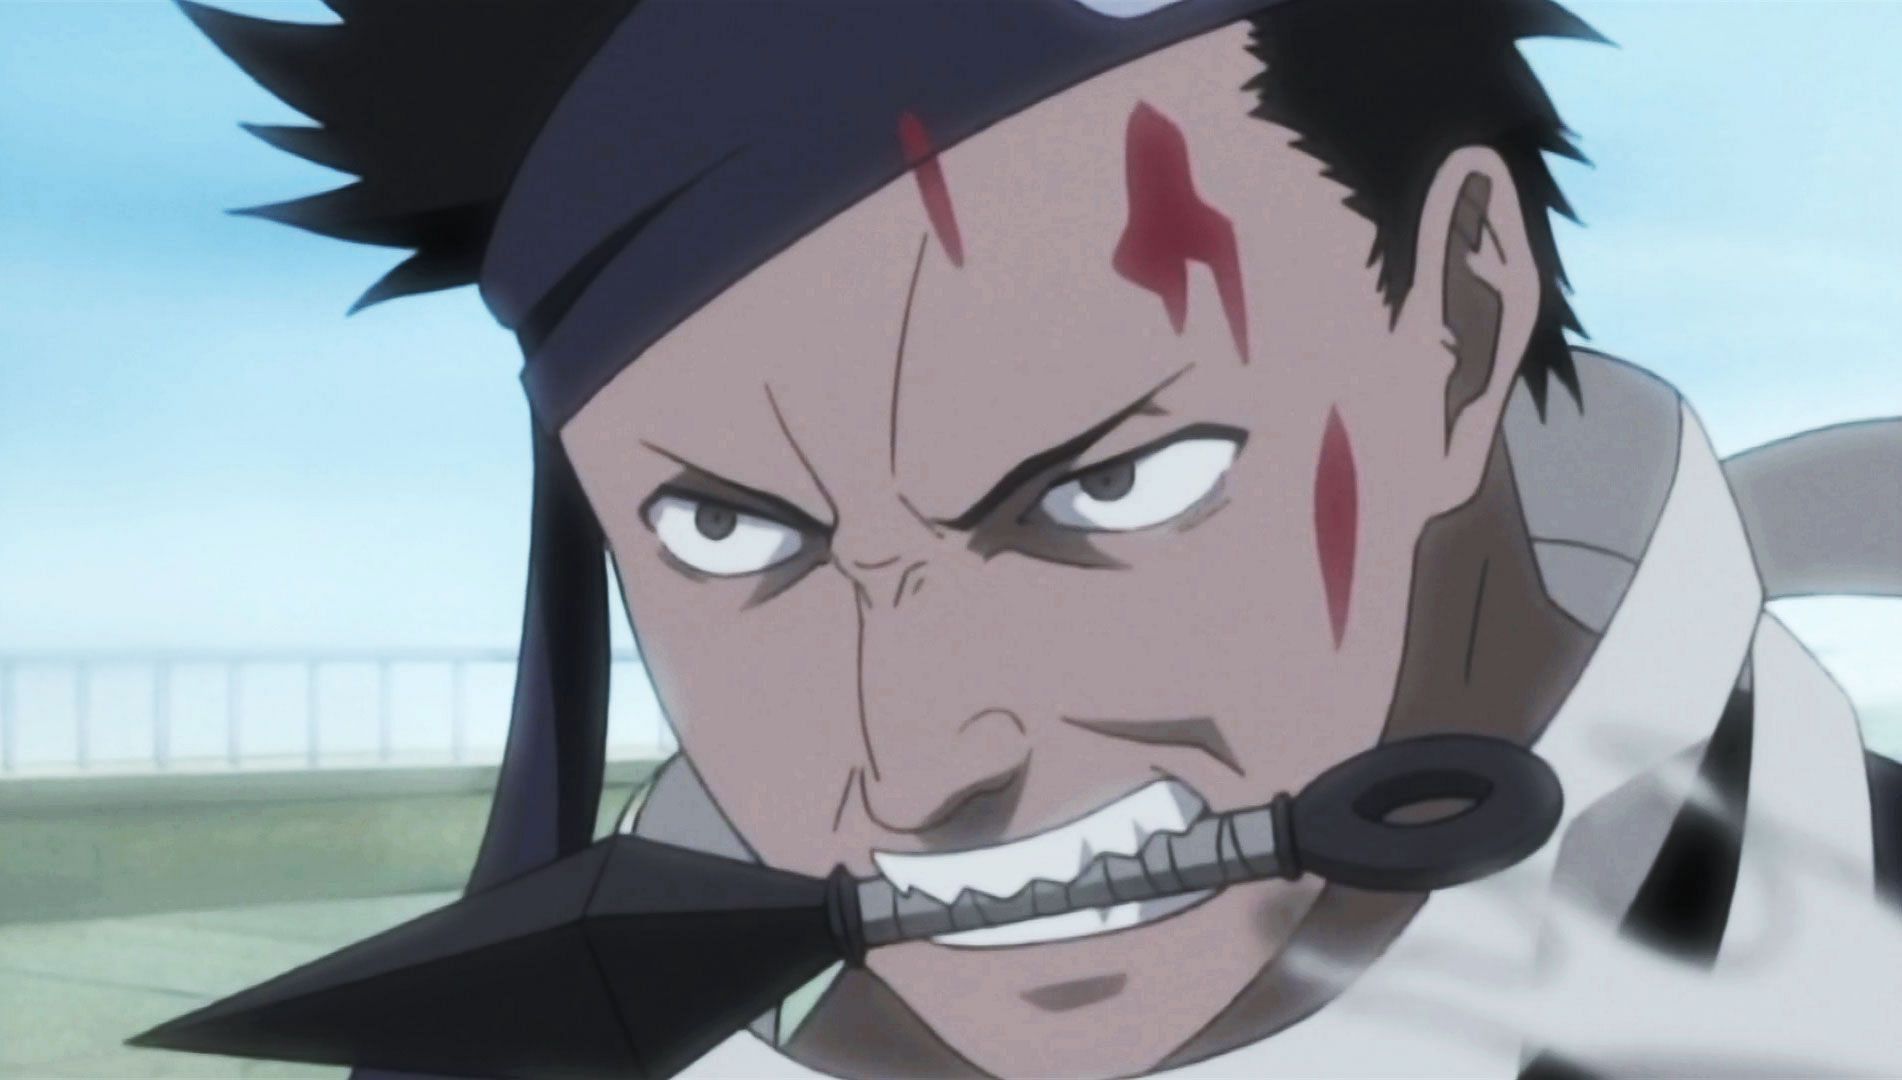 Zabuza Momochi as seen in Naruto (Image via Studio Pierrot)